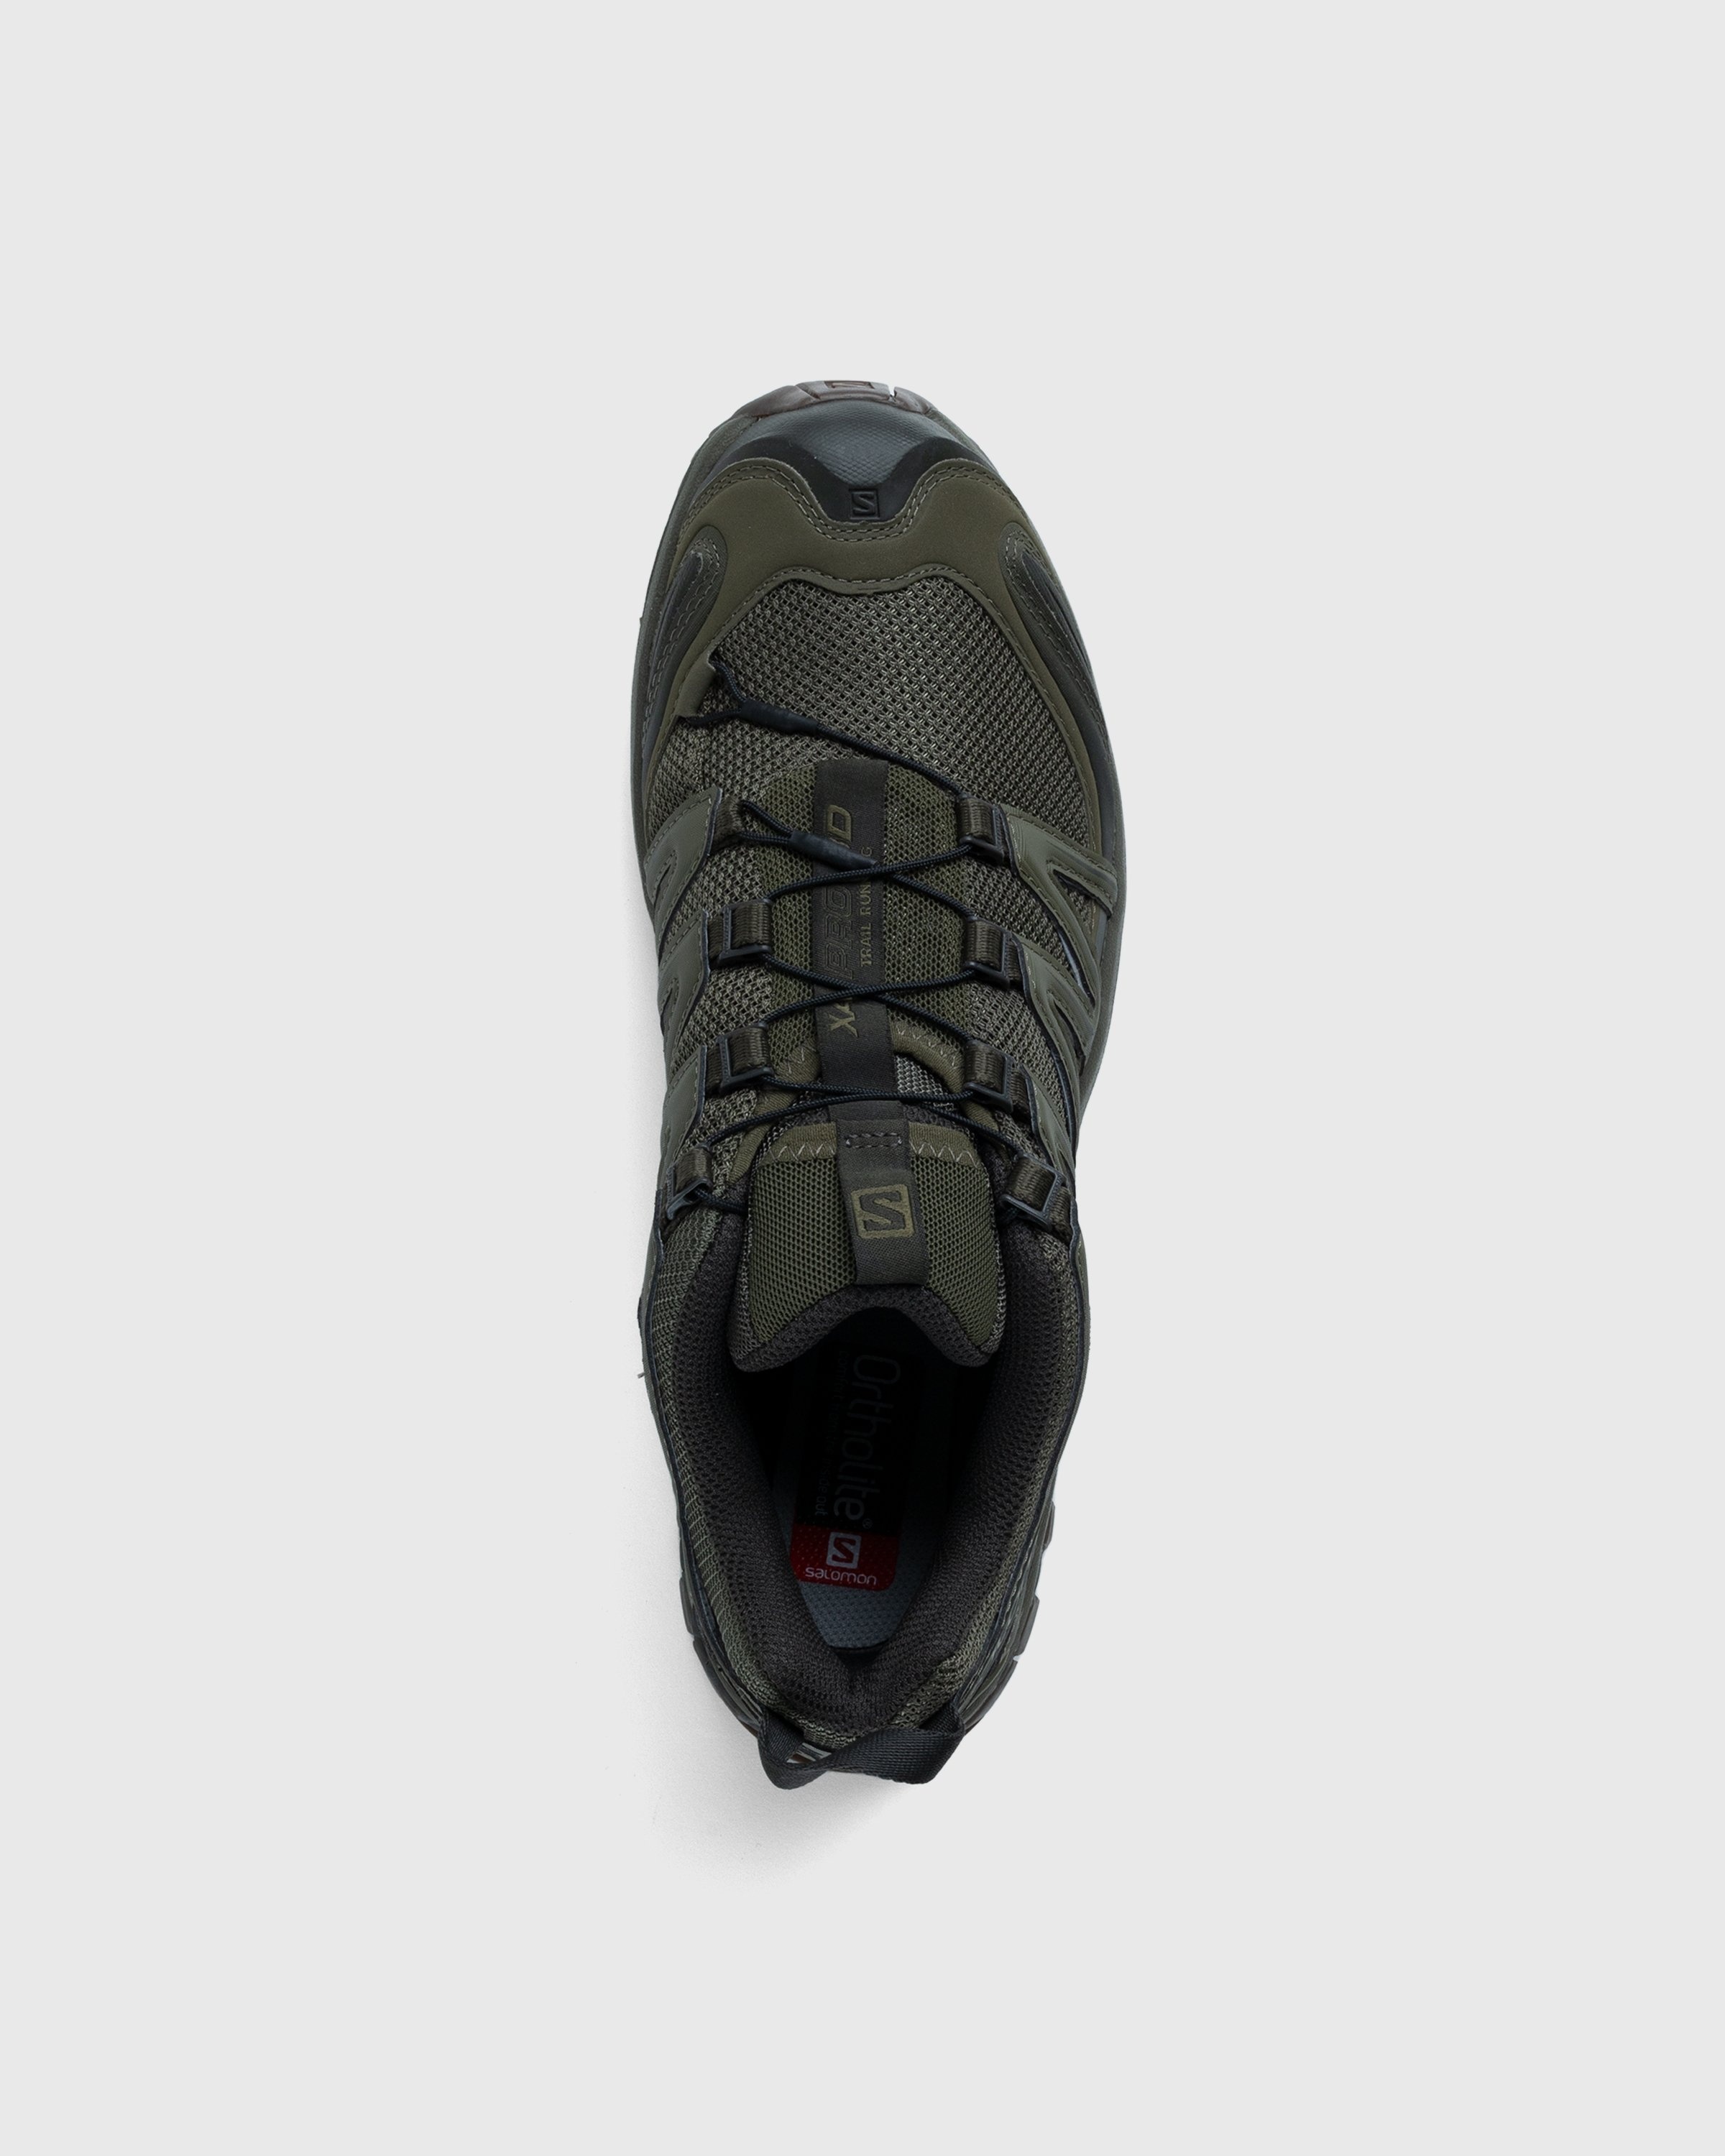 Salomon – XA Pro 3D Olive Night/Peat - Sneakers - Black - Image 5